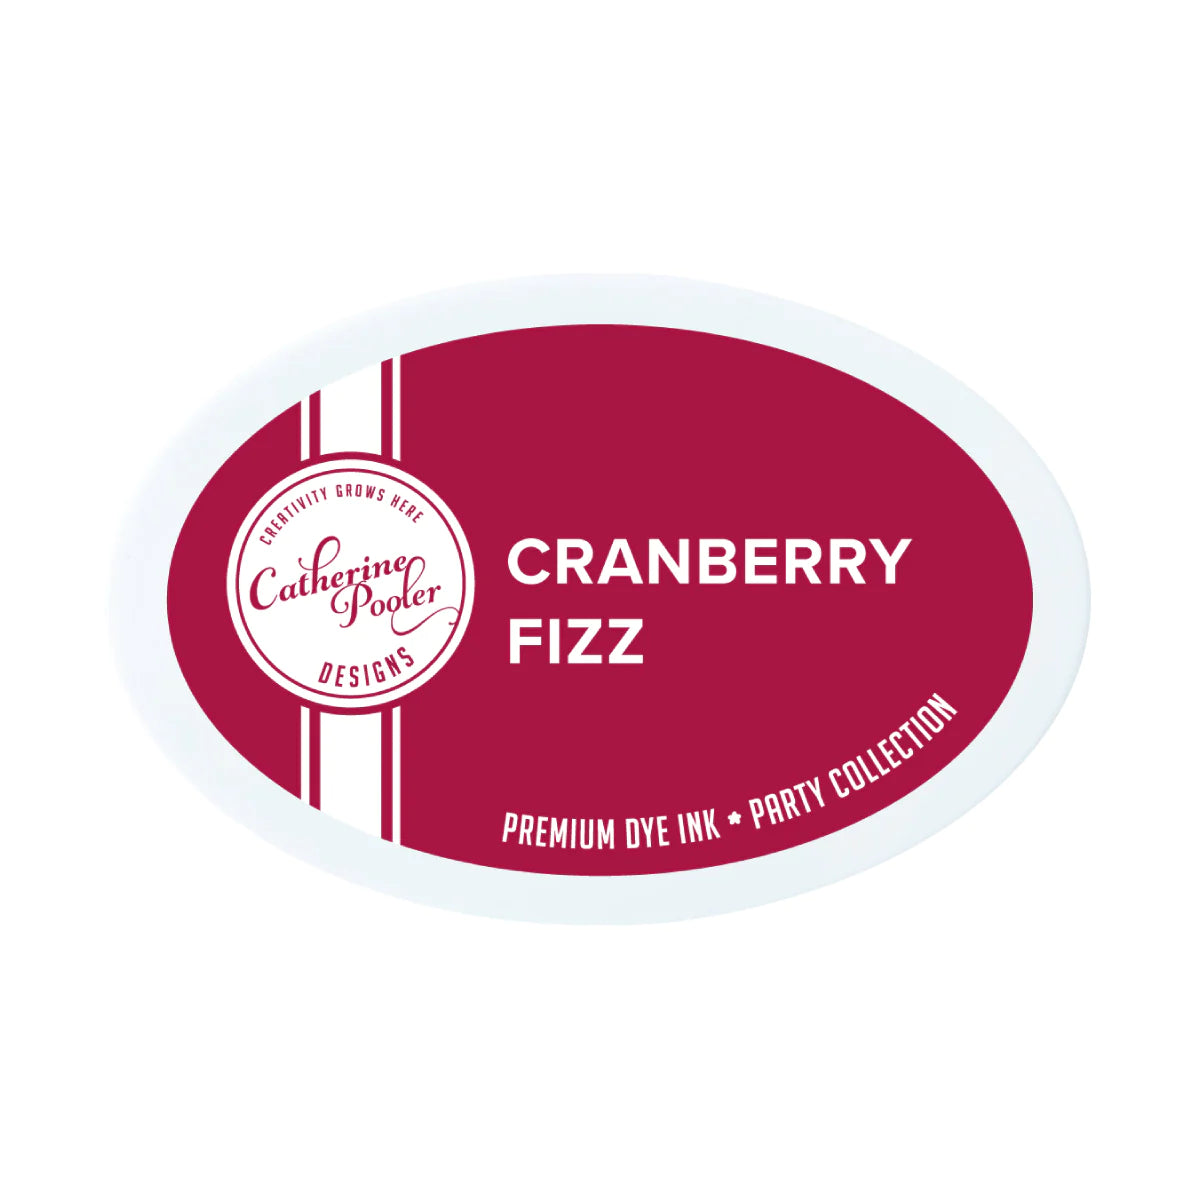 Cranberry Fizz Premium Dye Ink Pad - Party Collection